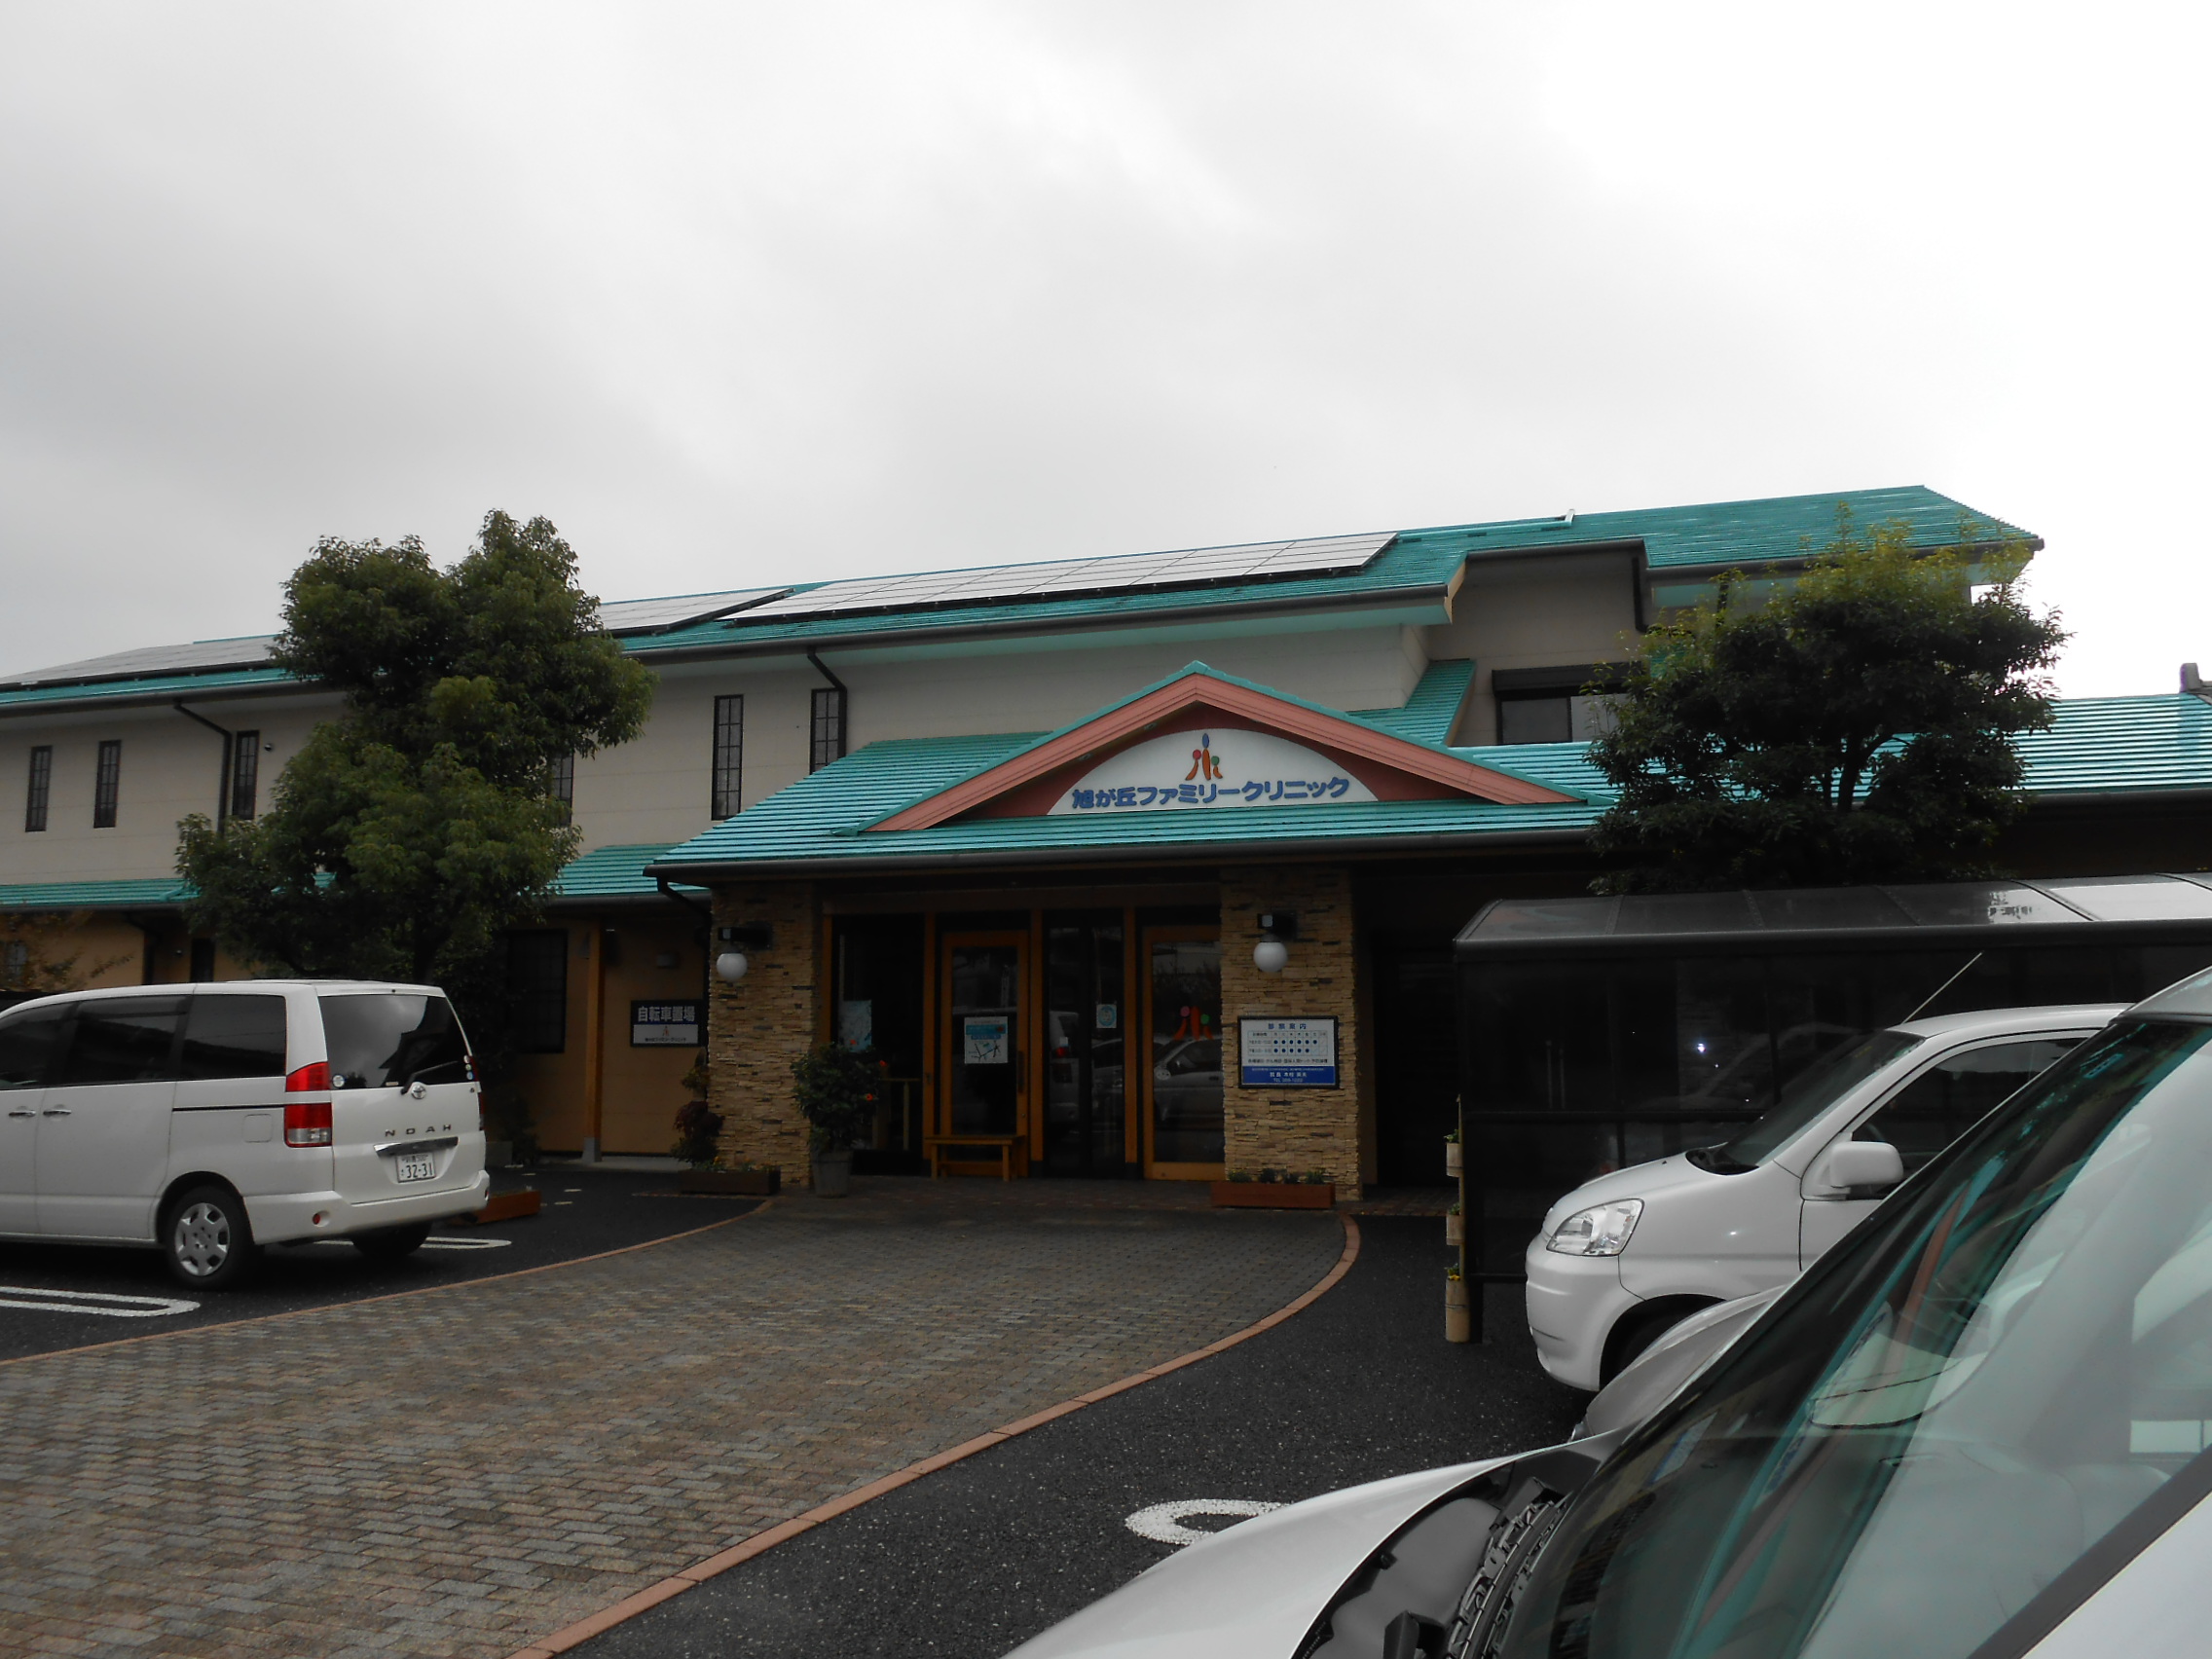 Hospital. 880m until Asahigaoka family clinic (hospital)